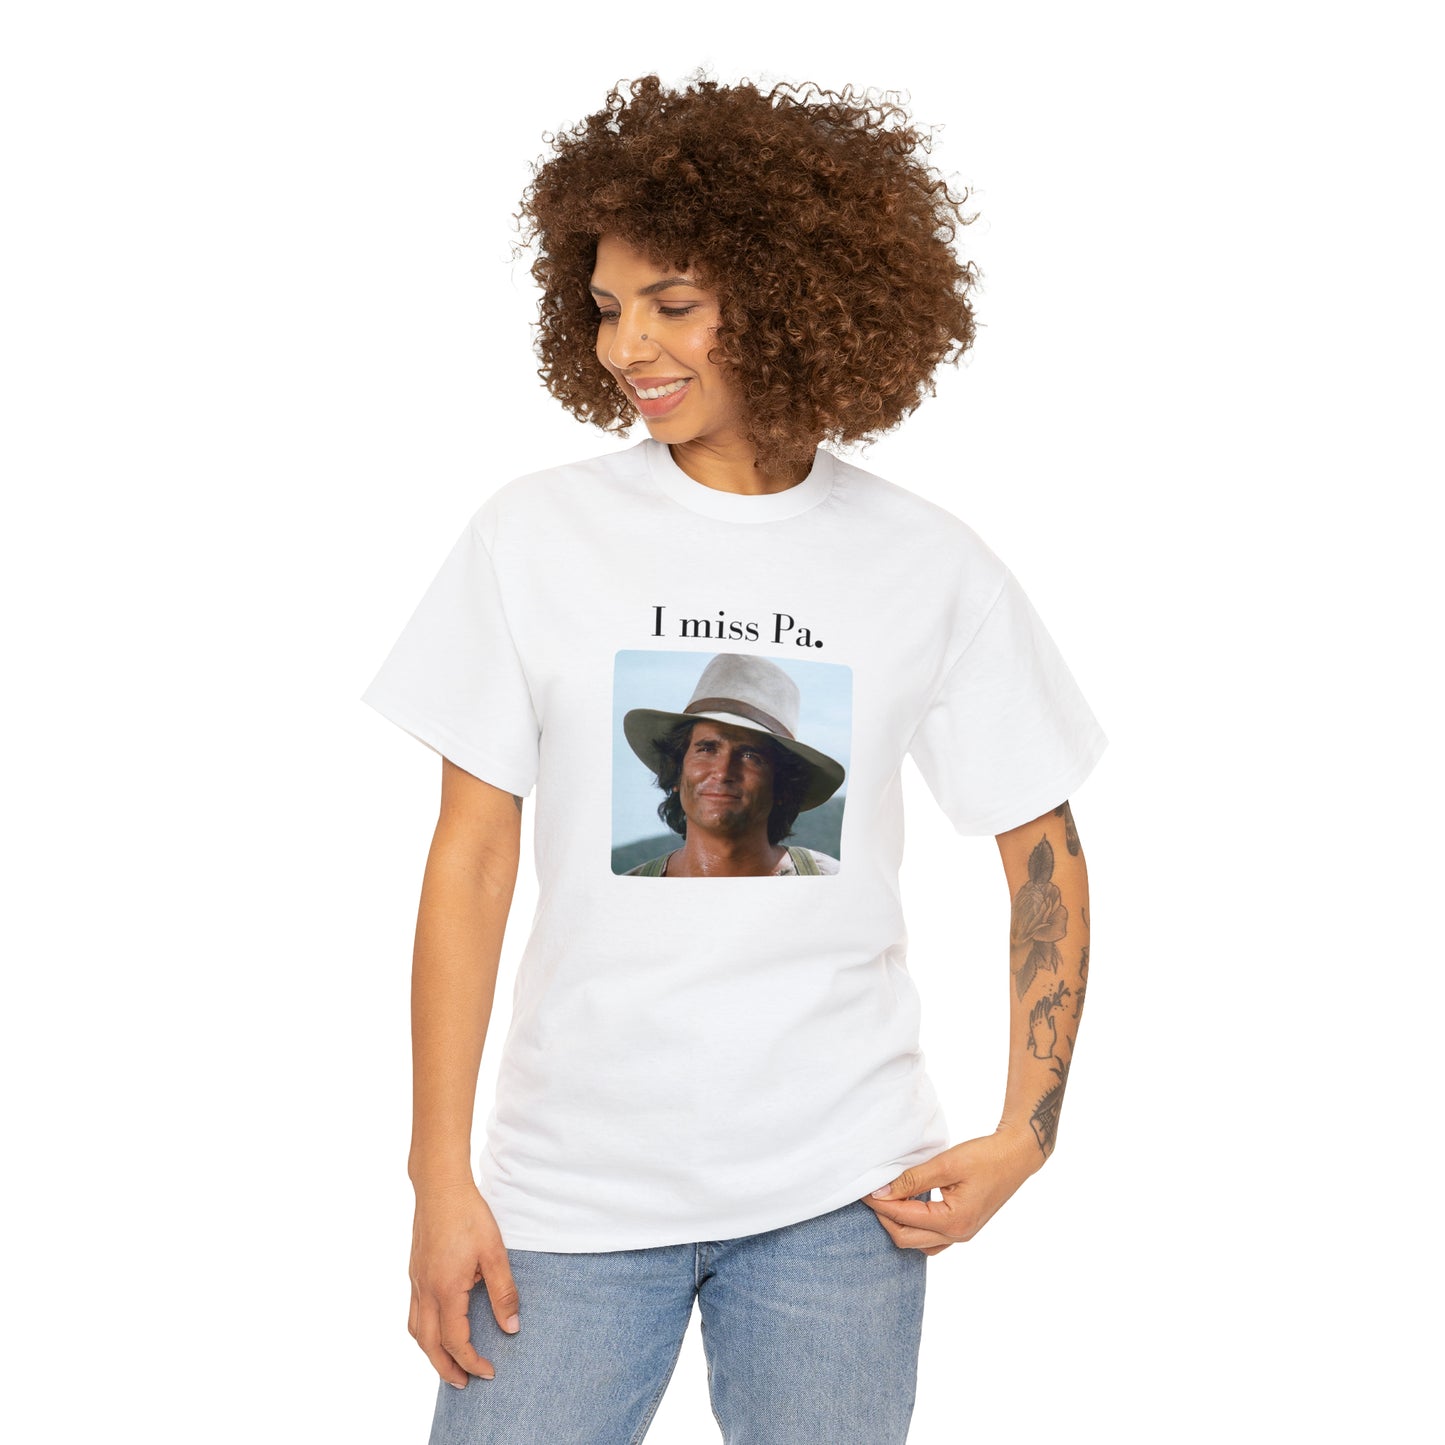 I miss Pa. (Michael Landon) (Little House on the Prairie) Unisex Heavy Cotton Tee (t-shirt)